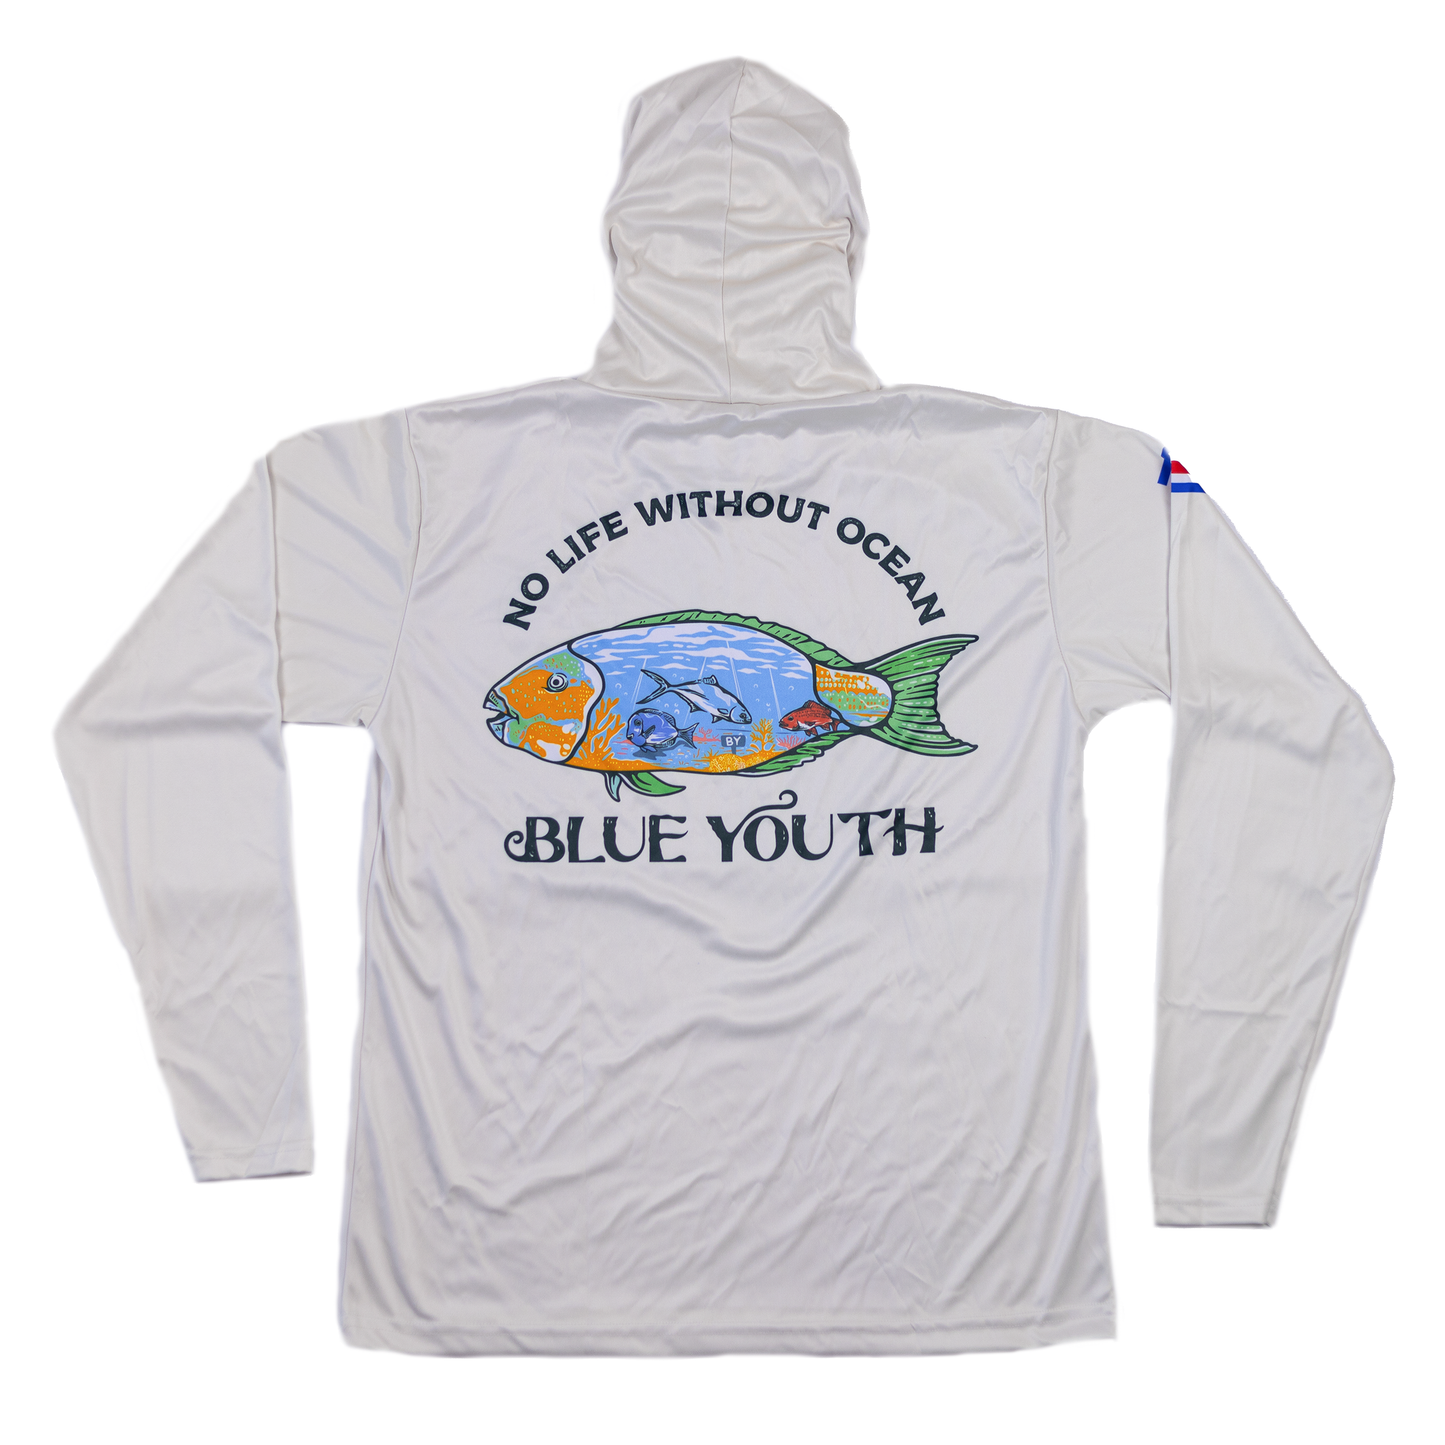 No Life Without Ocean - Camisa de Pesca